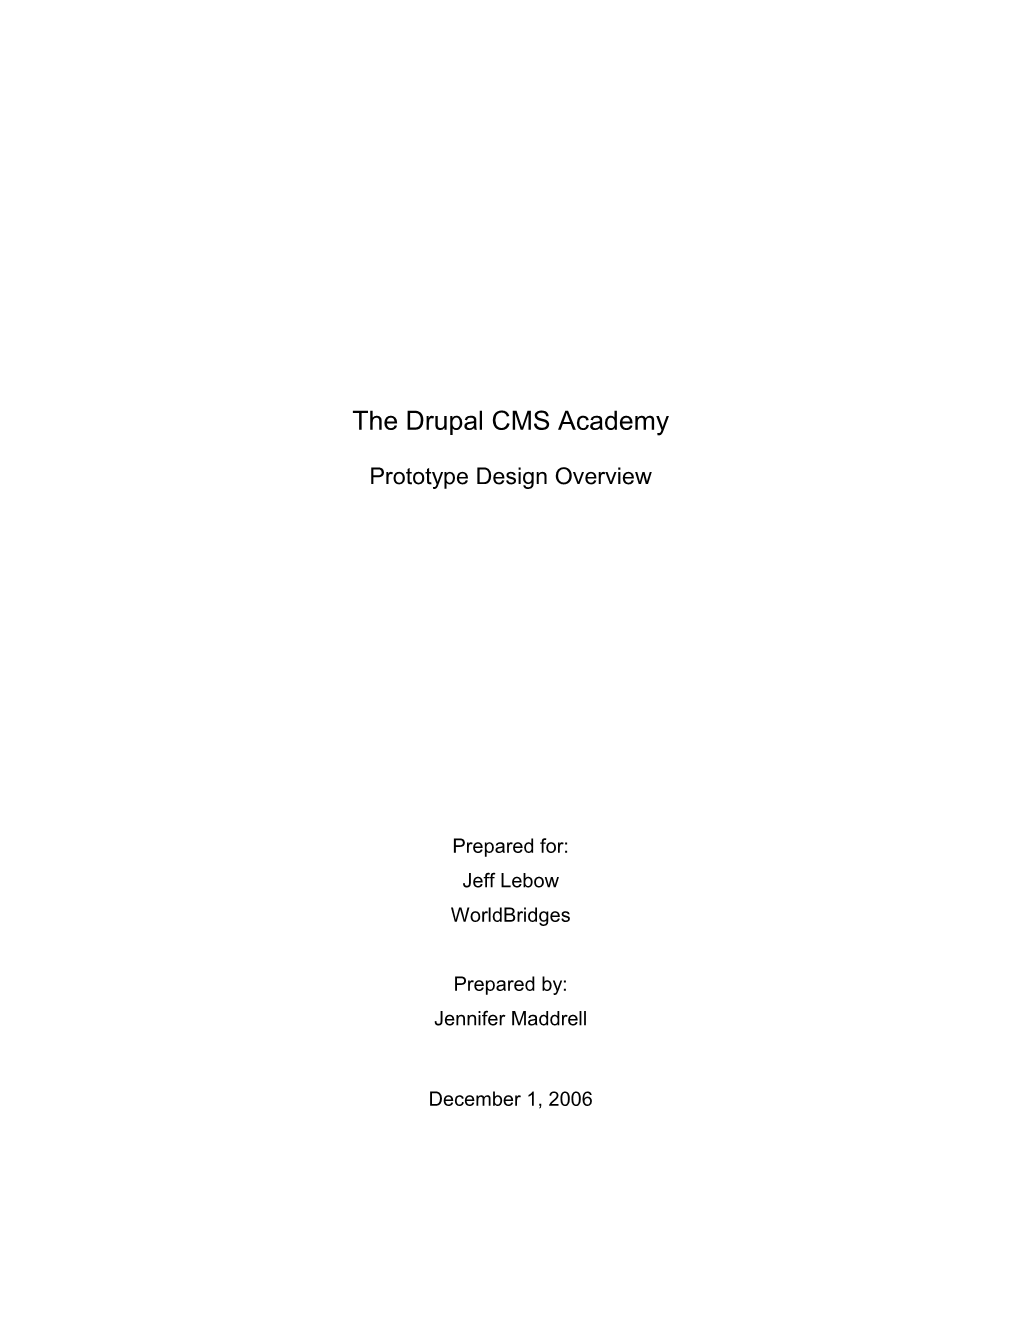 The Drupal CMS Academy